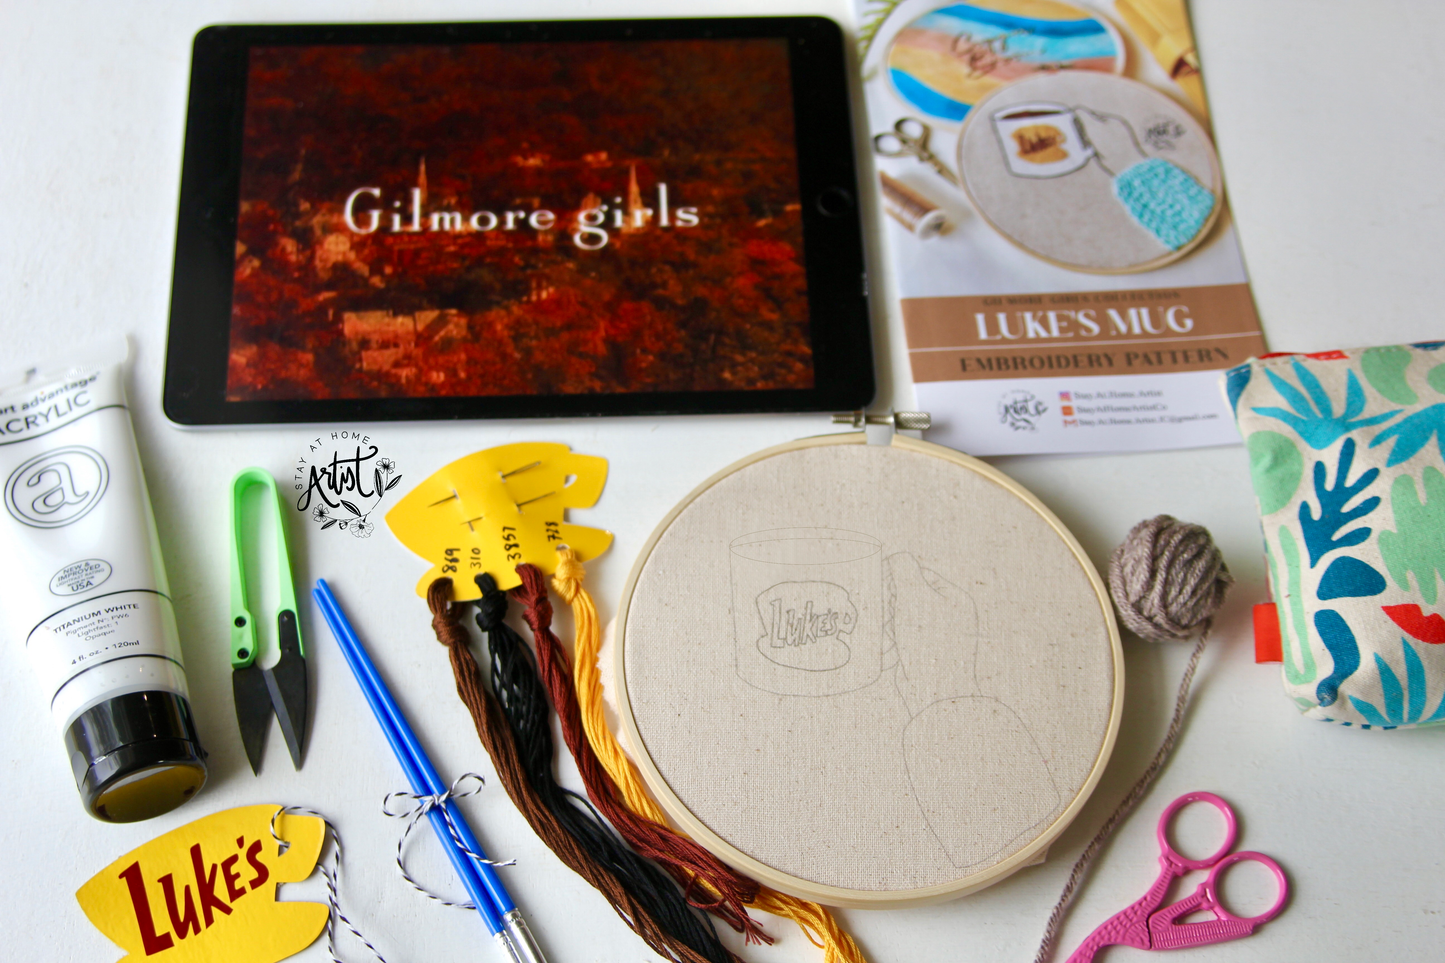 Luke's Mug Embroidery Kit--Gilmore Girls